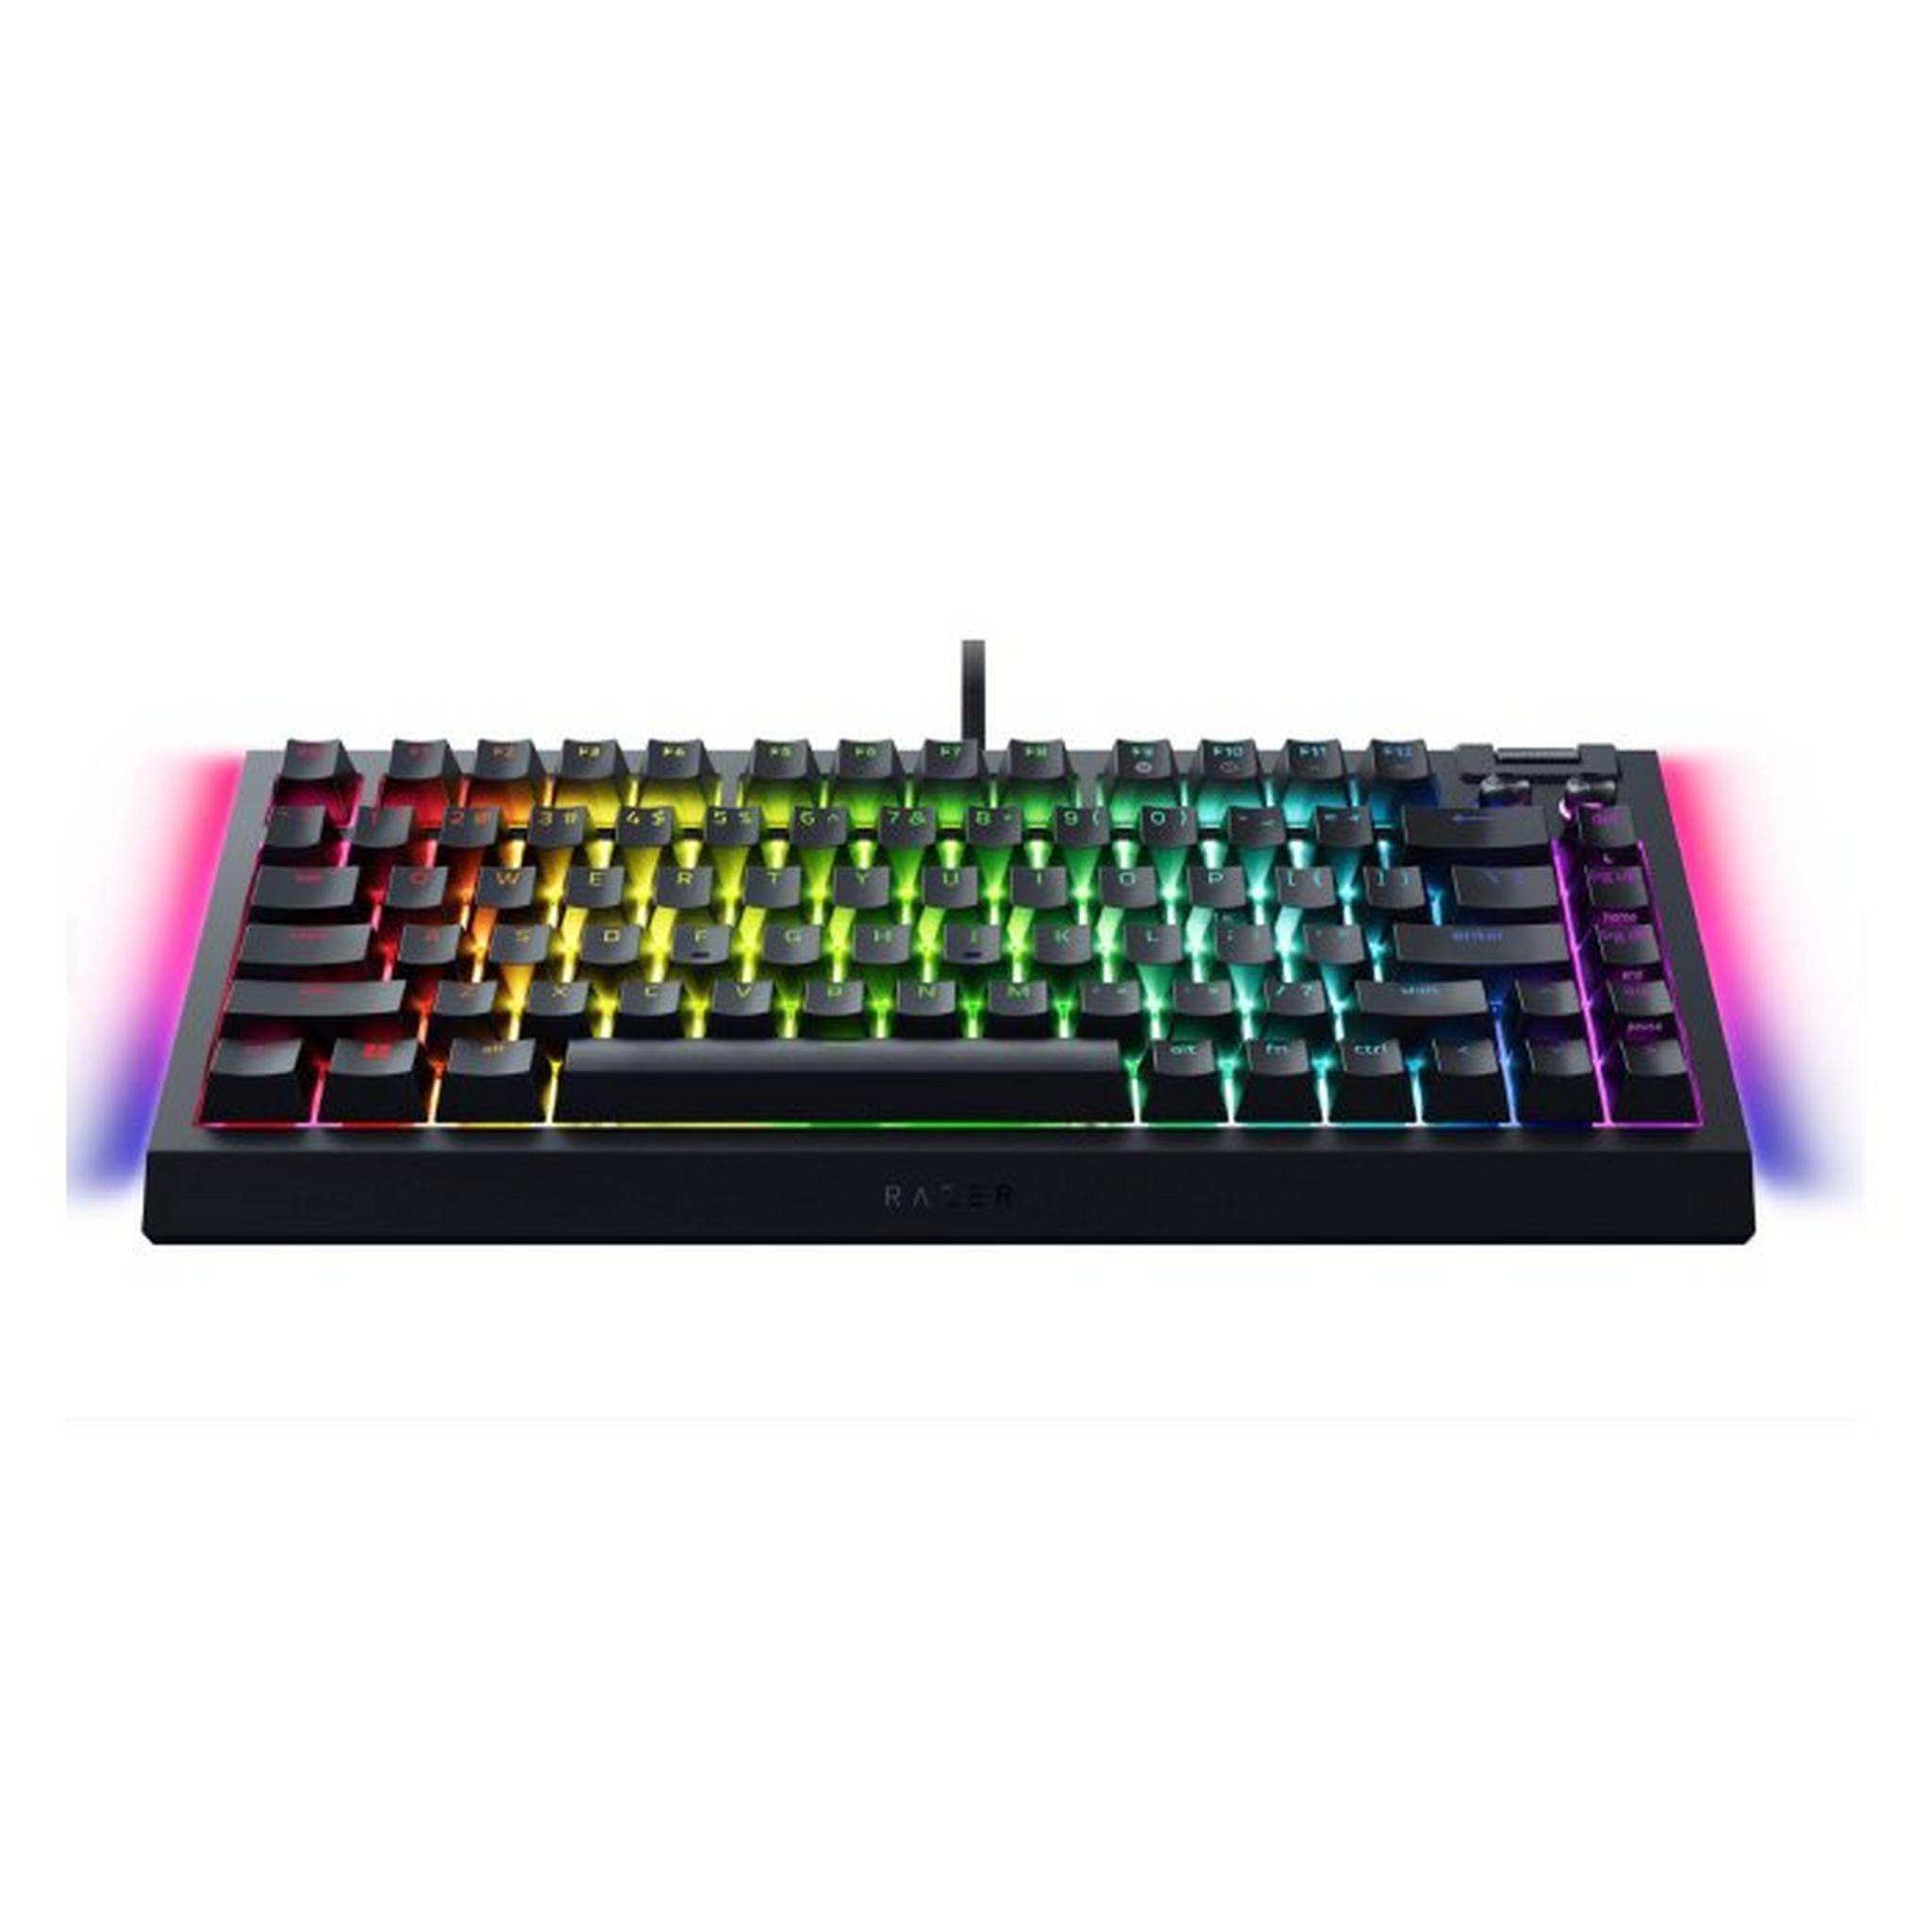 Razer Blackwidow V4 75% Mechanical Gaming Keyboard, RZ03-05000100-R3M1 – Black